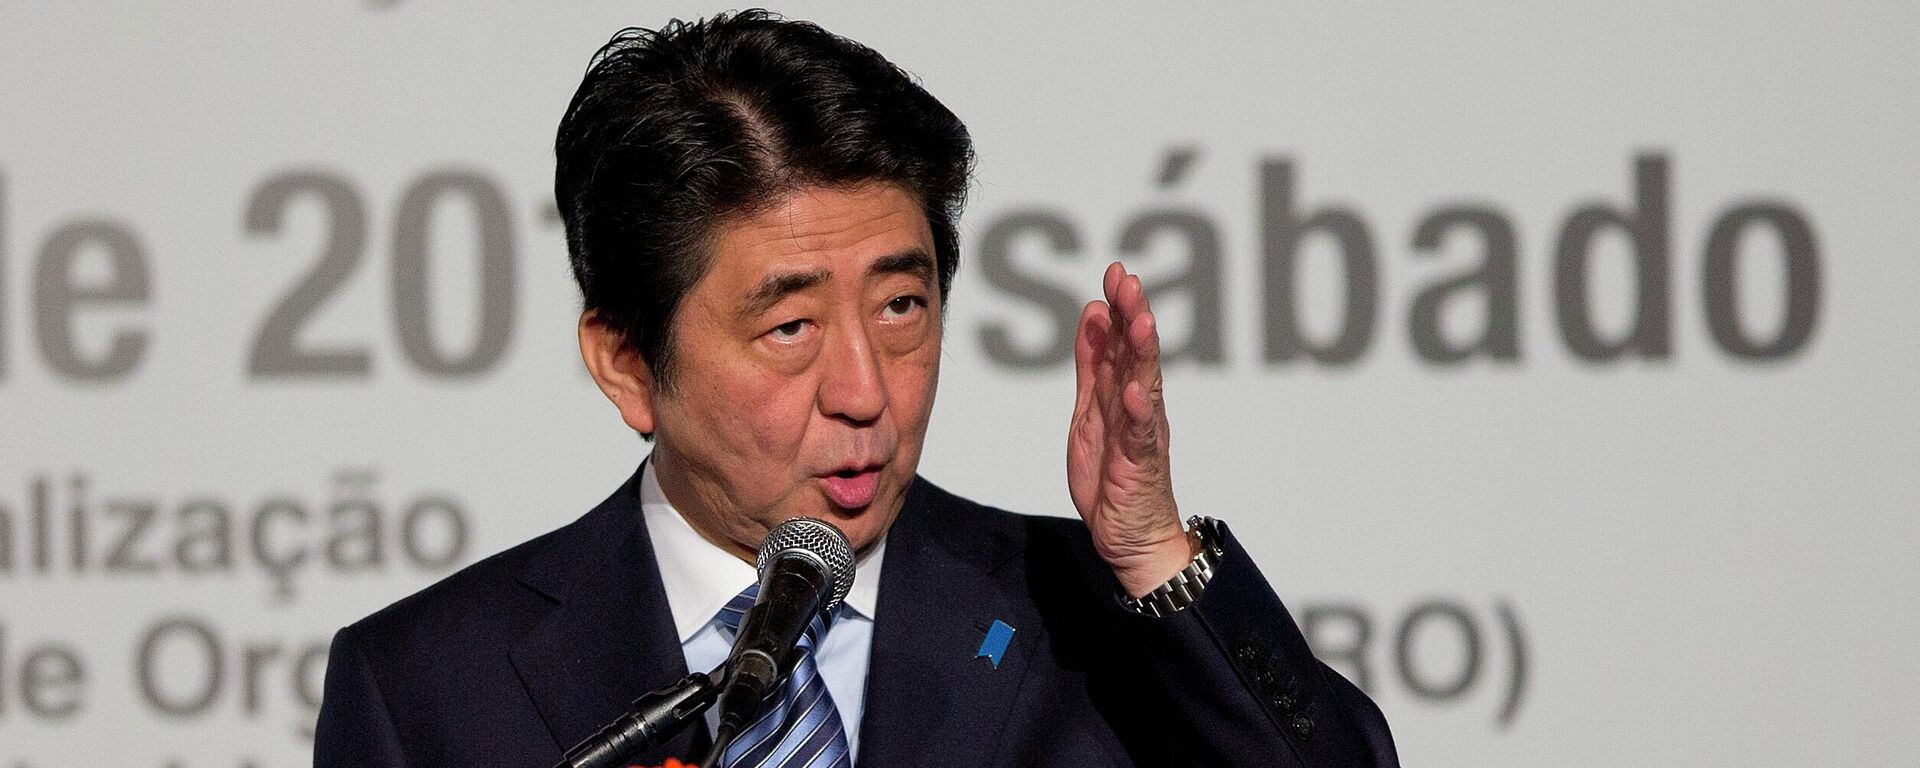 El exprimer ministro japonés Shinzo Abe durante un evento en Brasil en 2014 - Sputnik Mundo, 1920, 08.07.2022